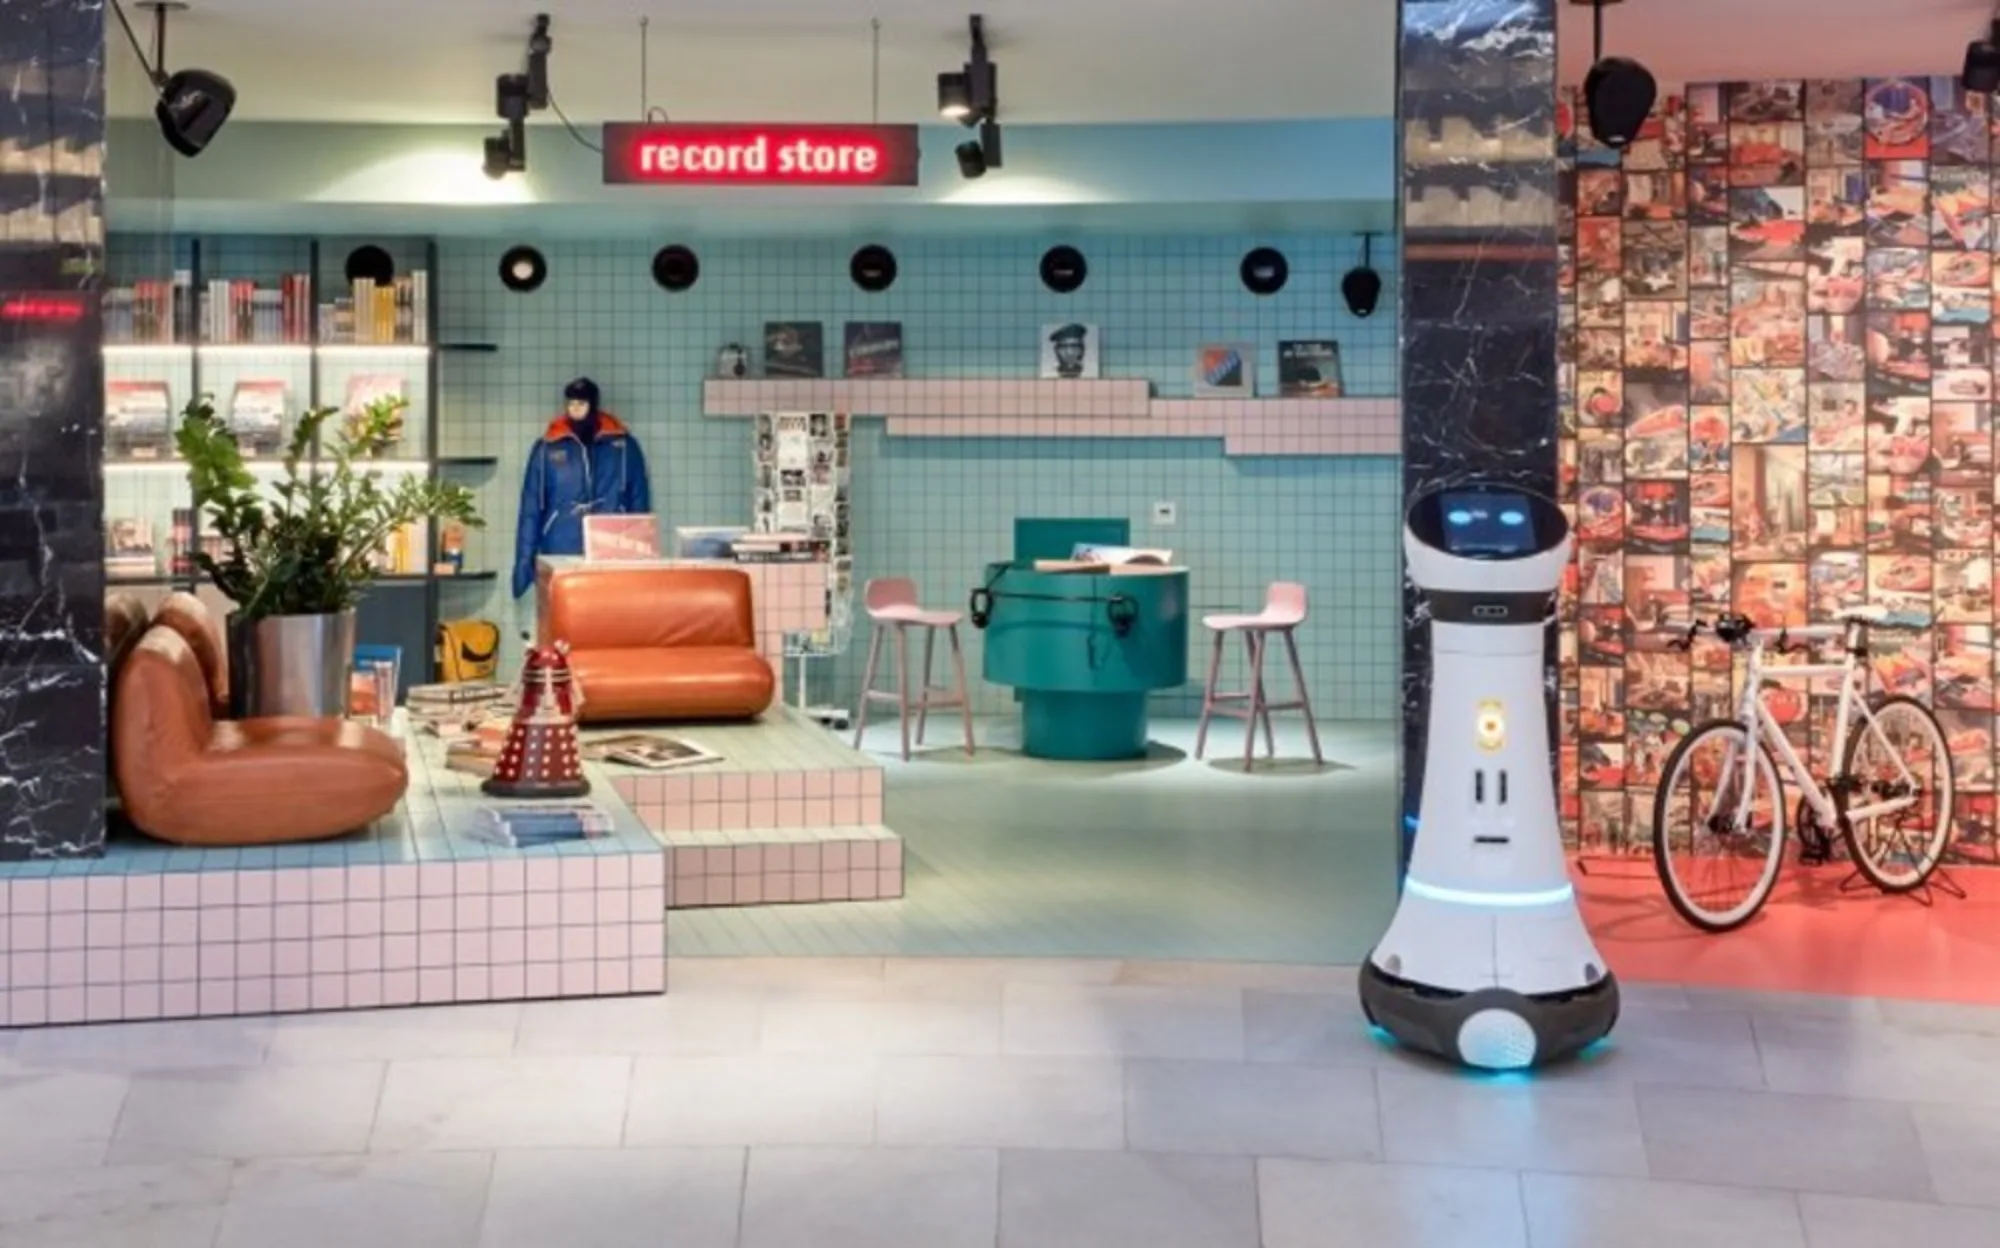 Bowo • Smart hotel robot